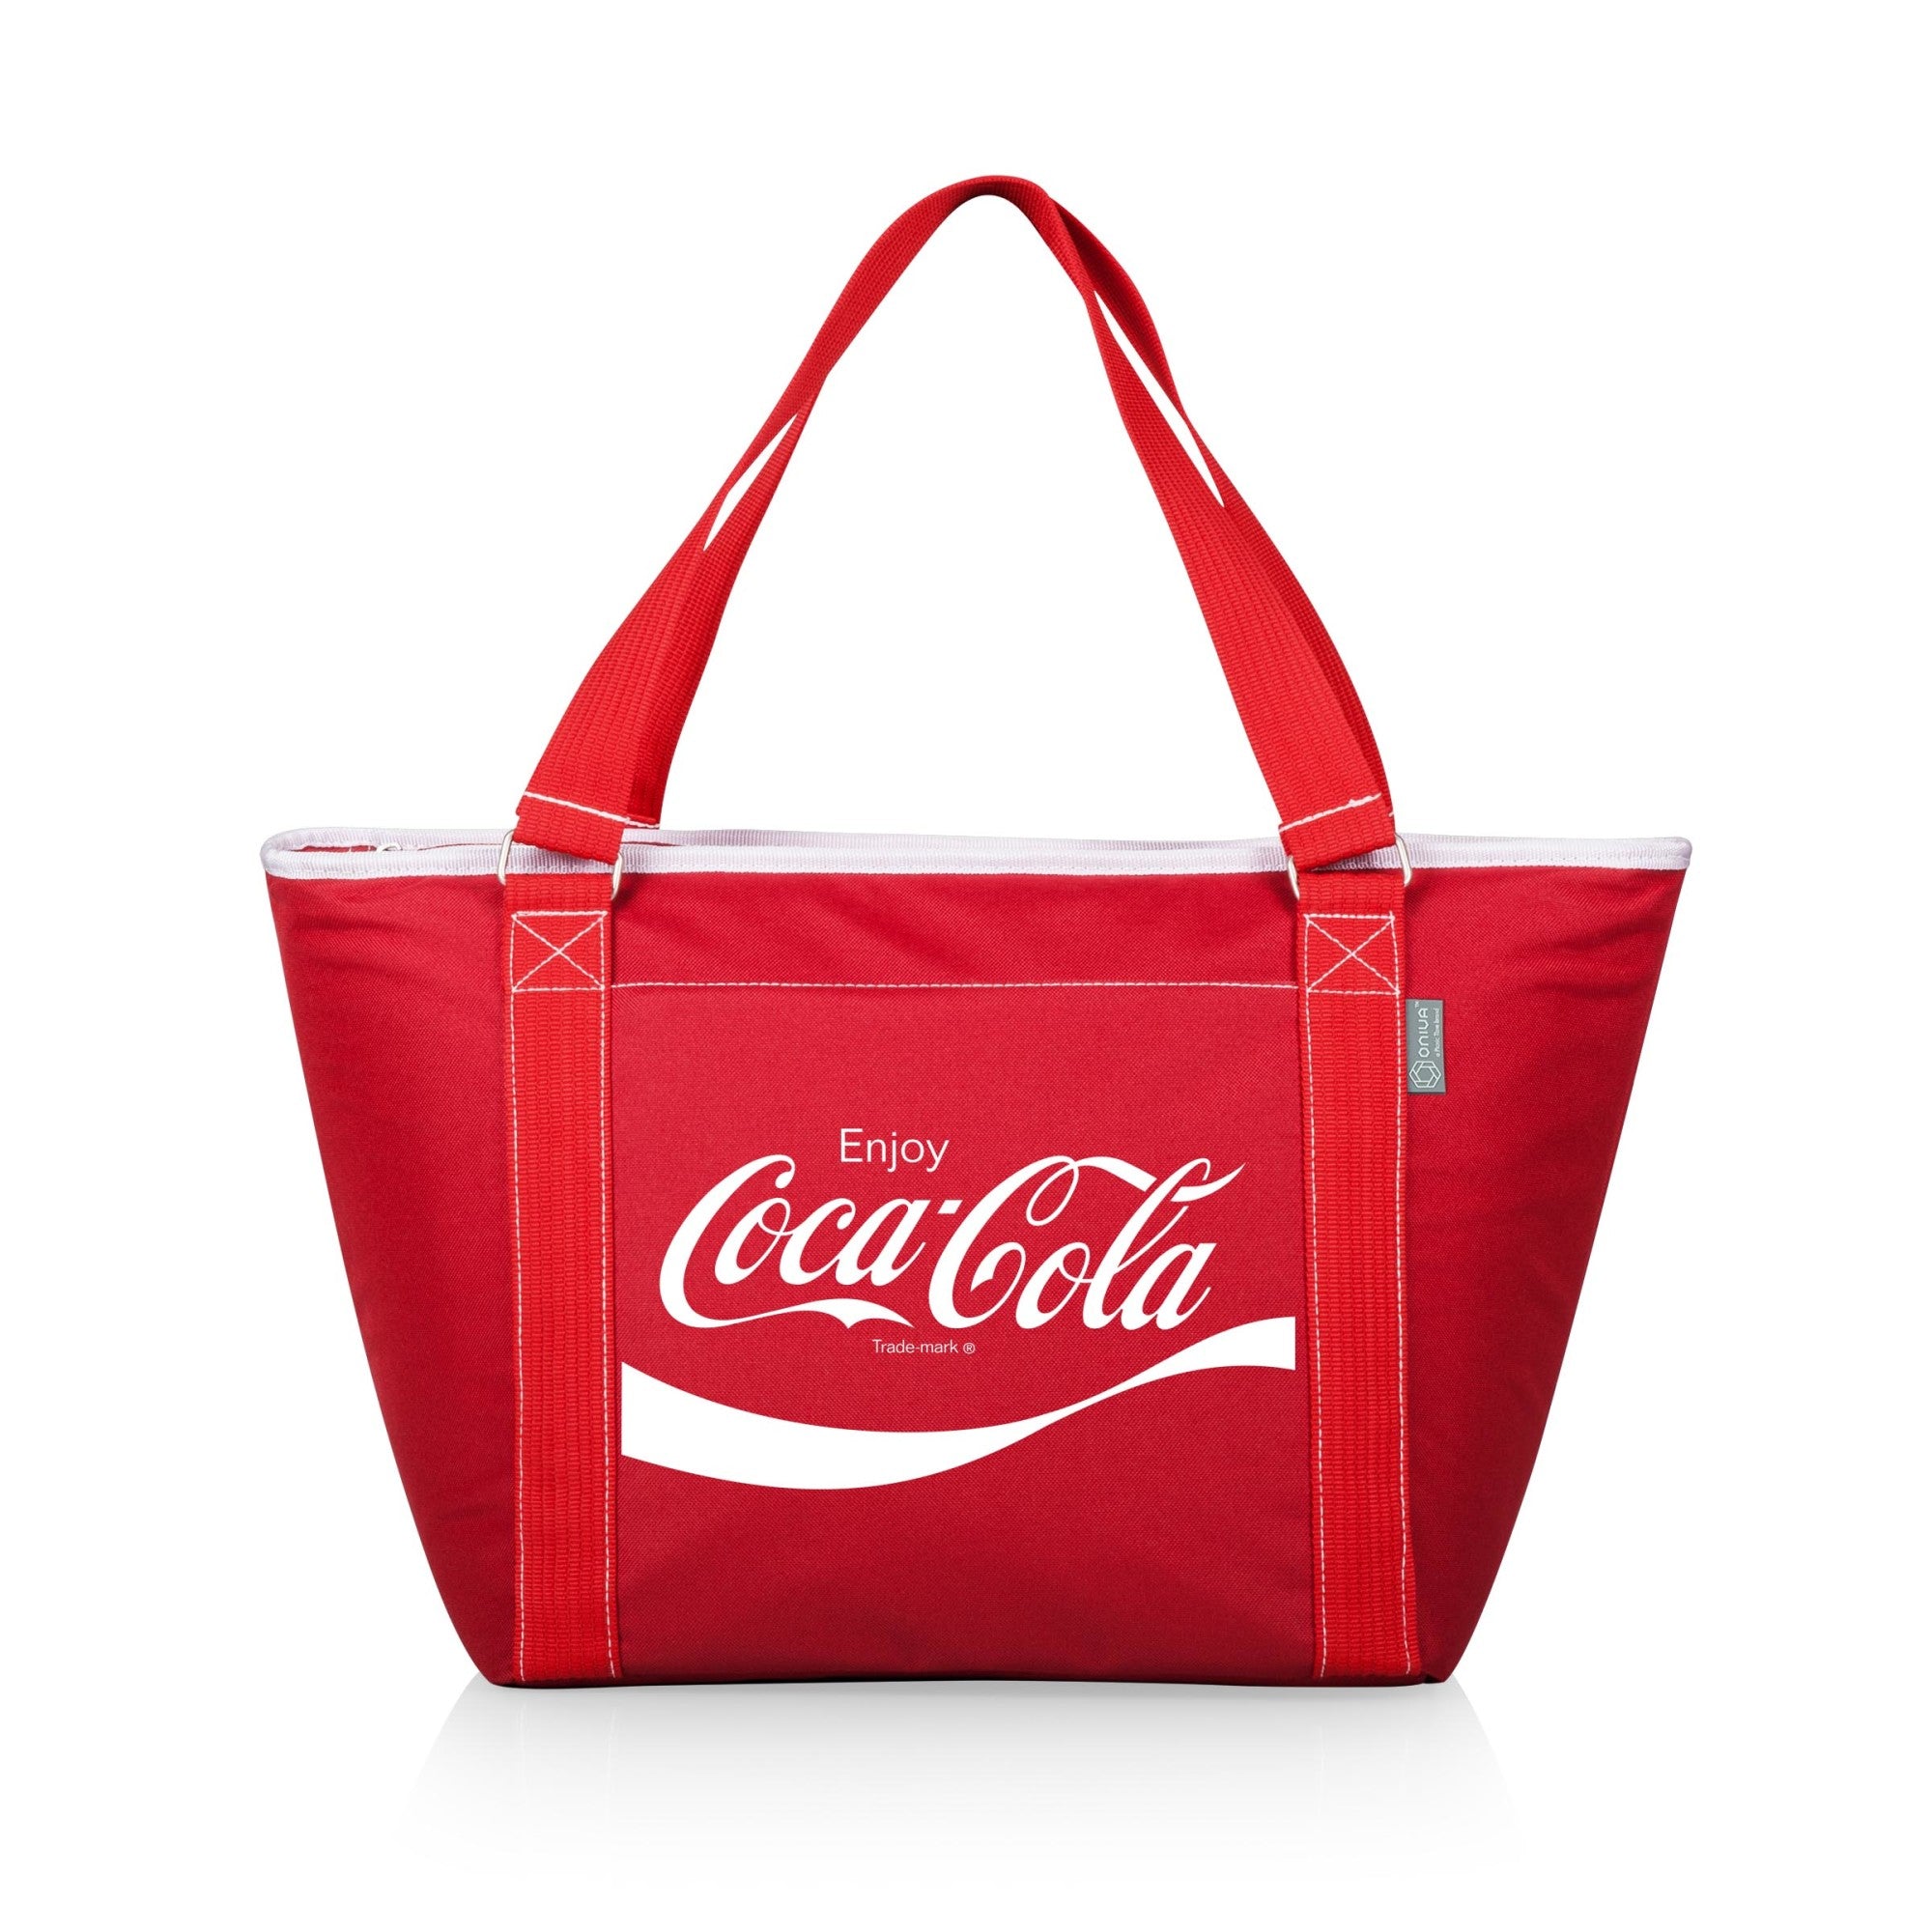 Coca-Cola Enjoy Coke - Topanga Cooler Tote Bag